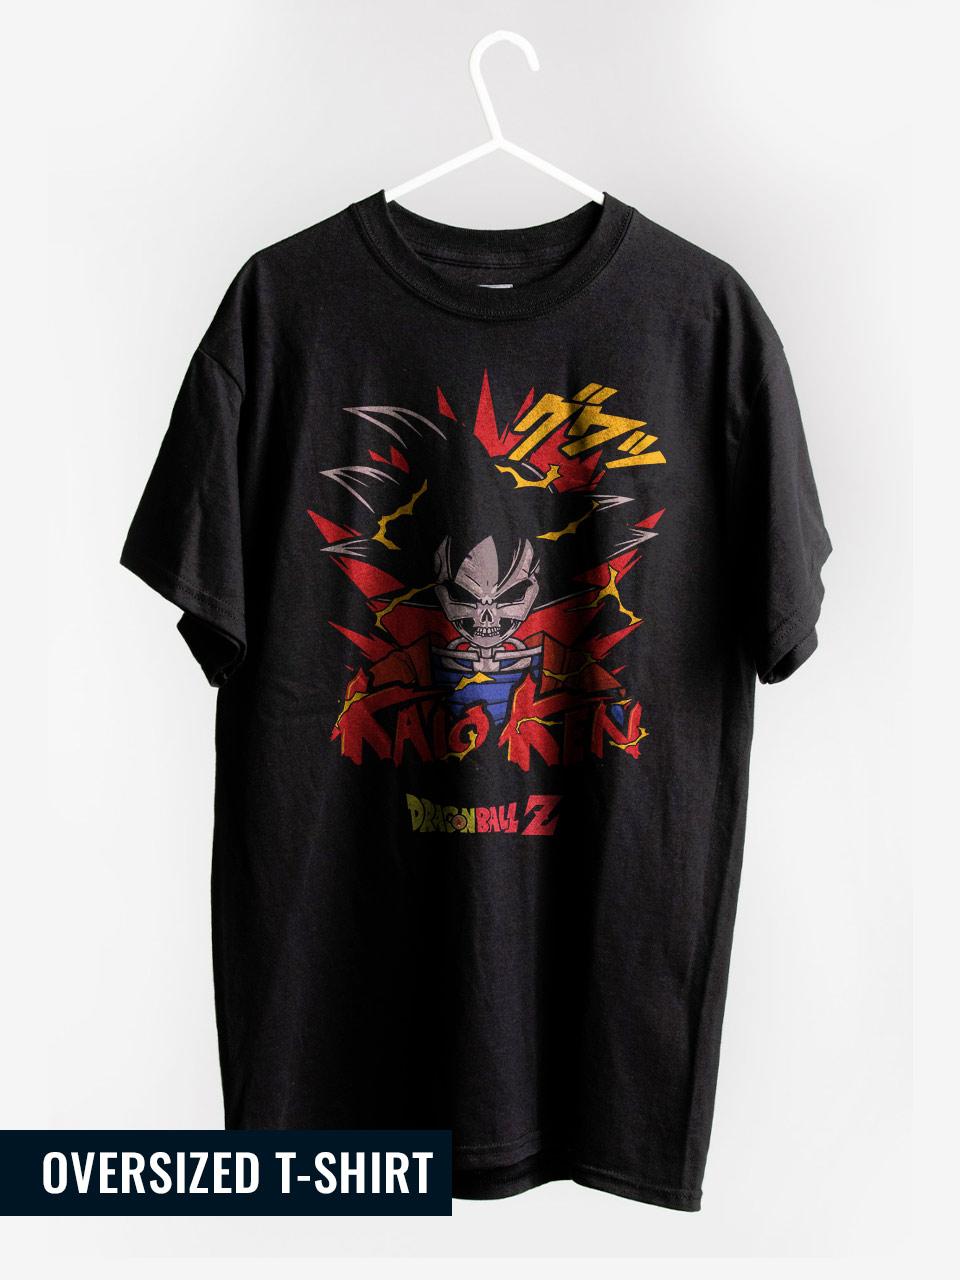 Kaio-Ken Energy Oversized T-shirt 